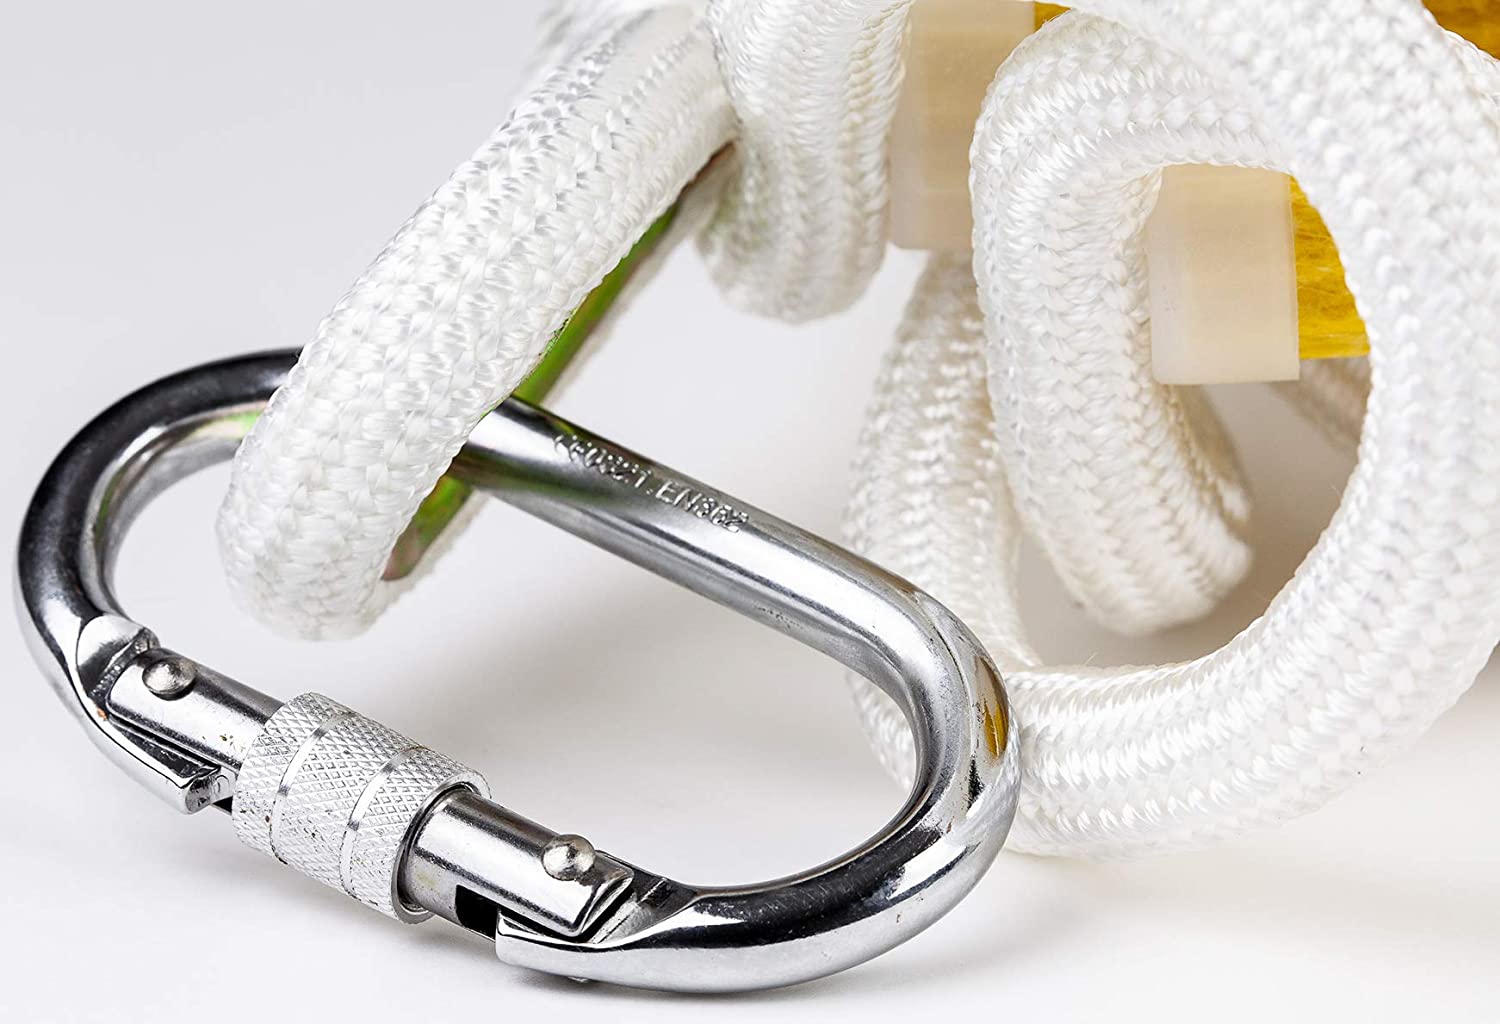 1/8 Inch Adjustable Heavy Duty Tie Down Rope Carabiner Hook Clip Hanger  150lbs